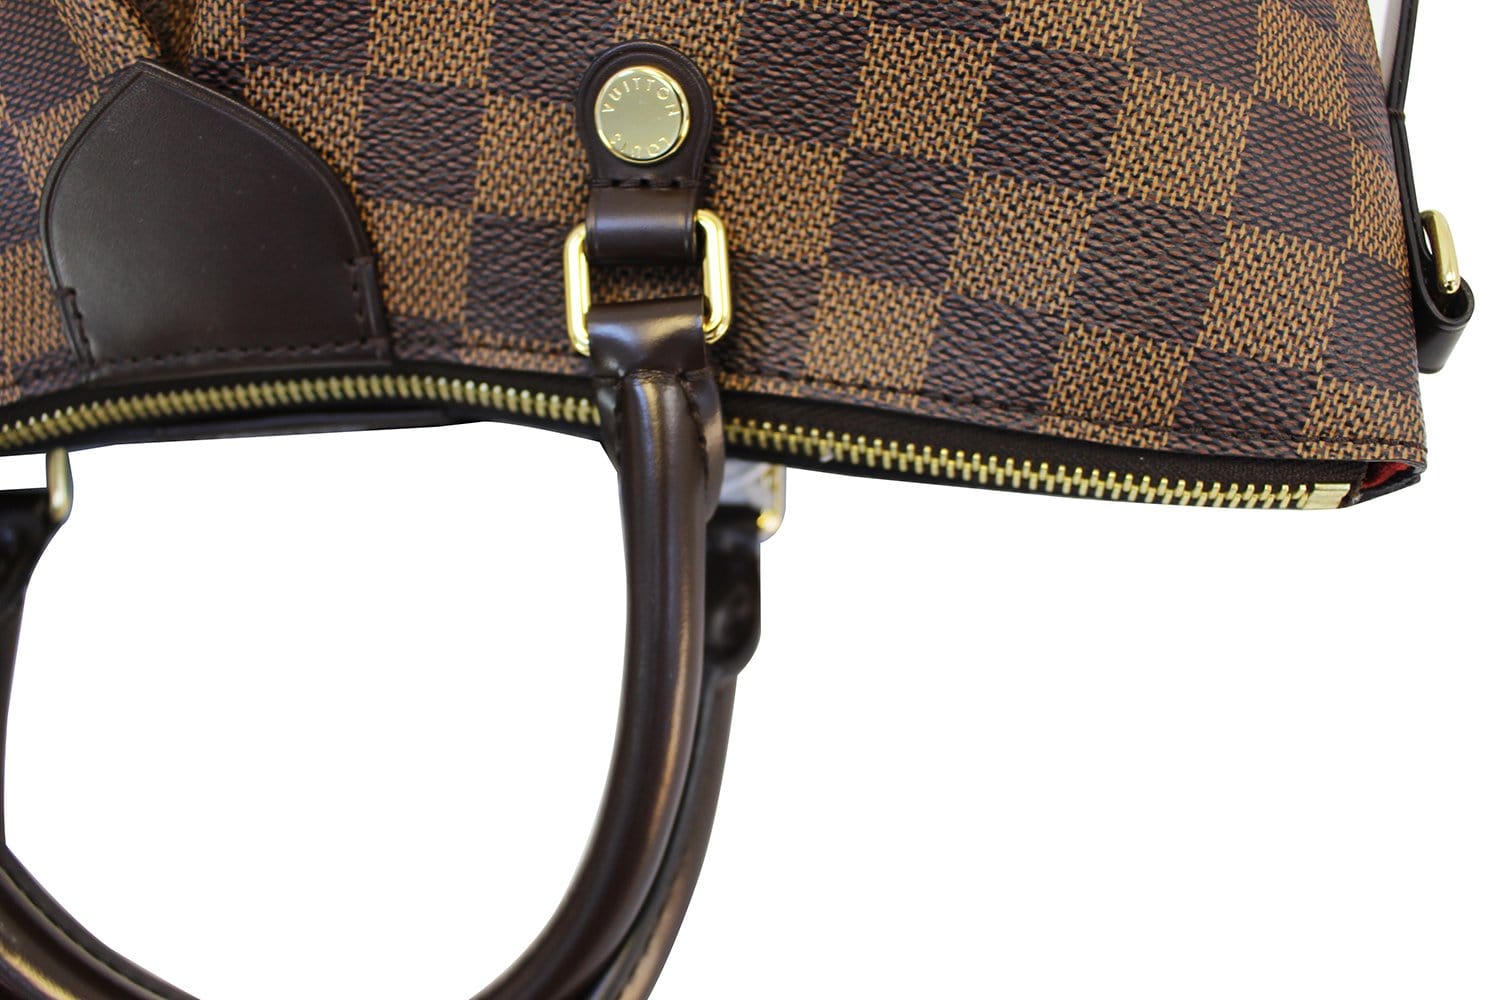 Louis Vuitton Siena Discontinued Leather Purse